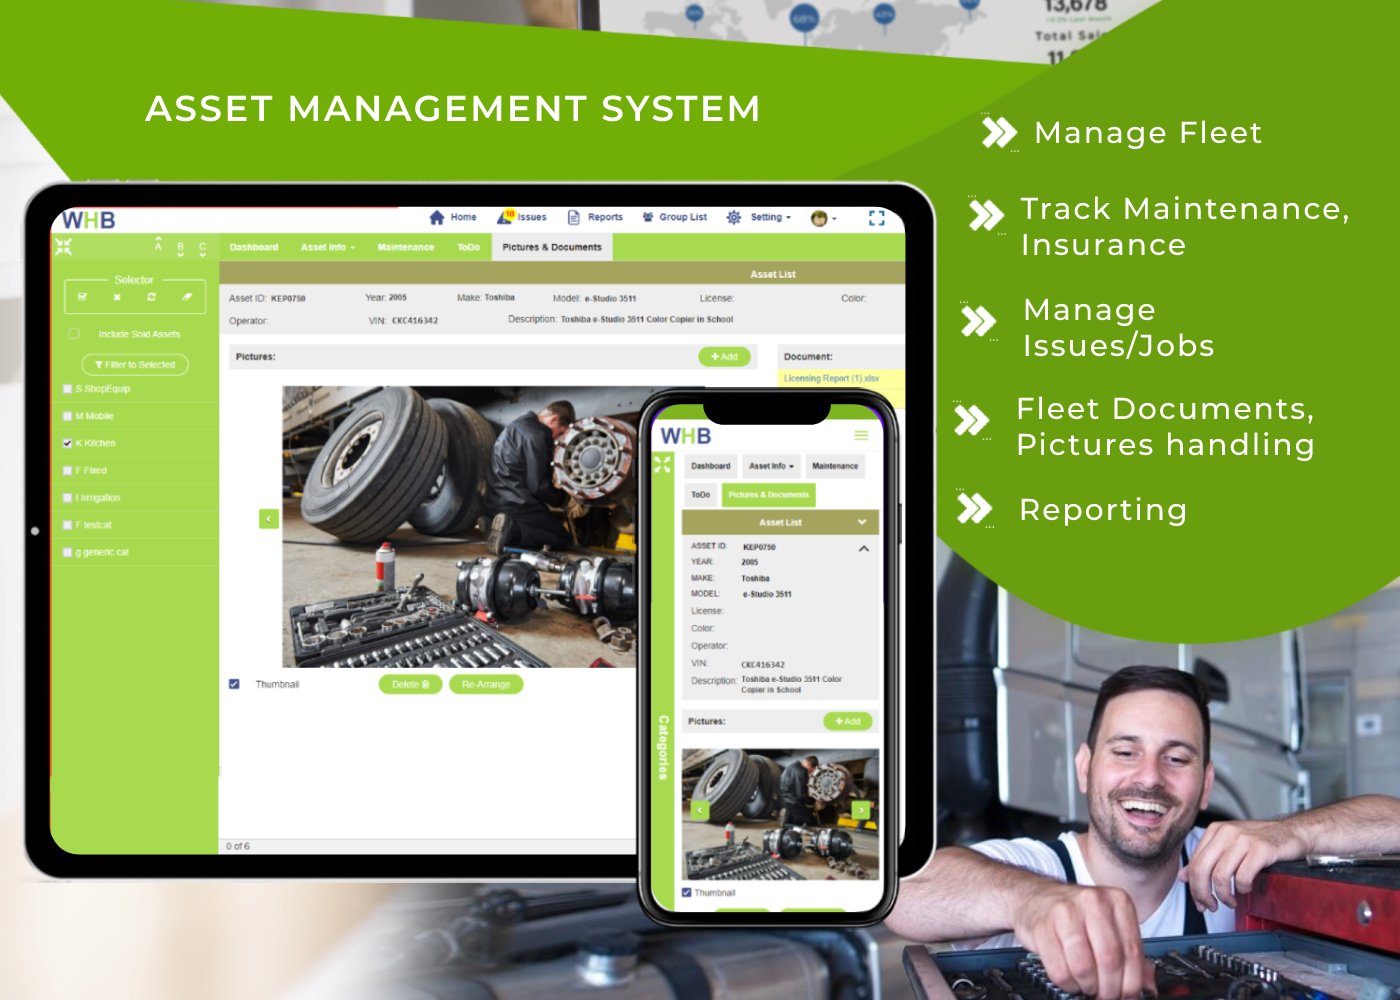 Image explaining features of fleet management system